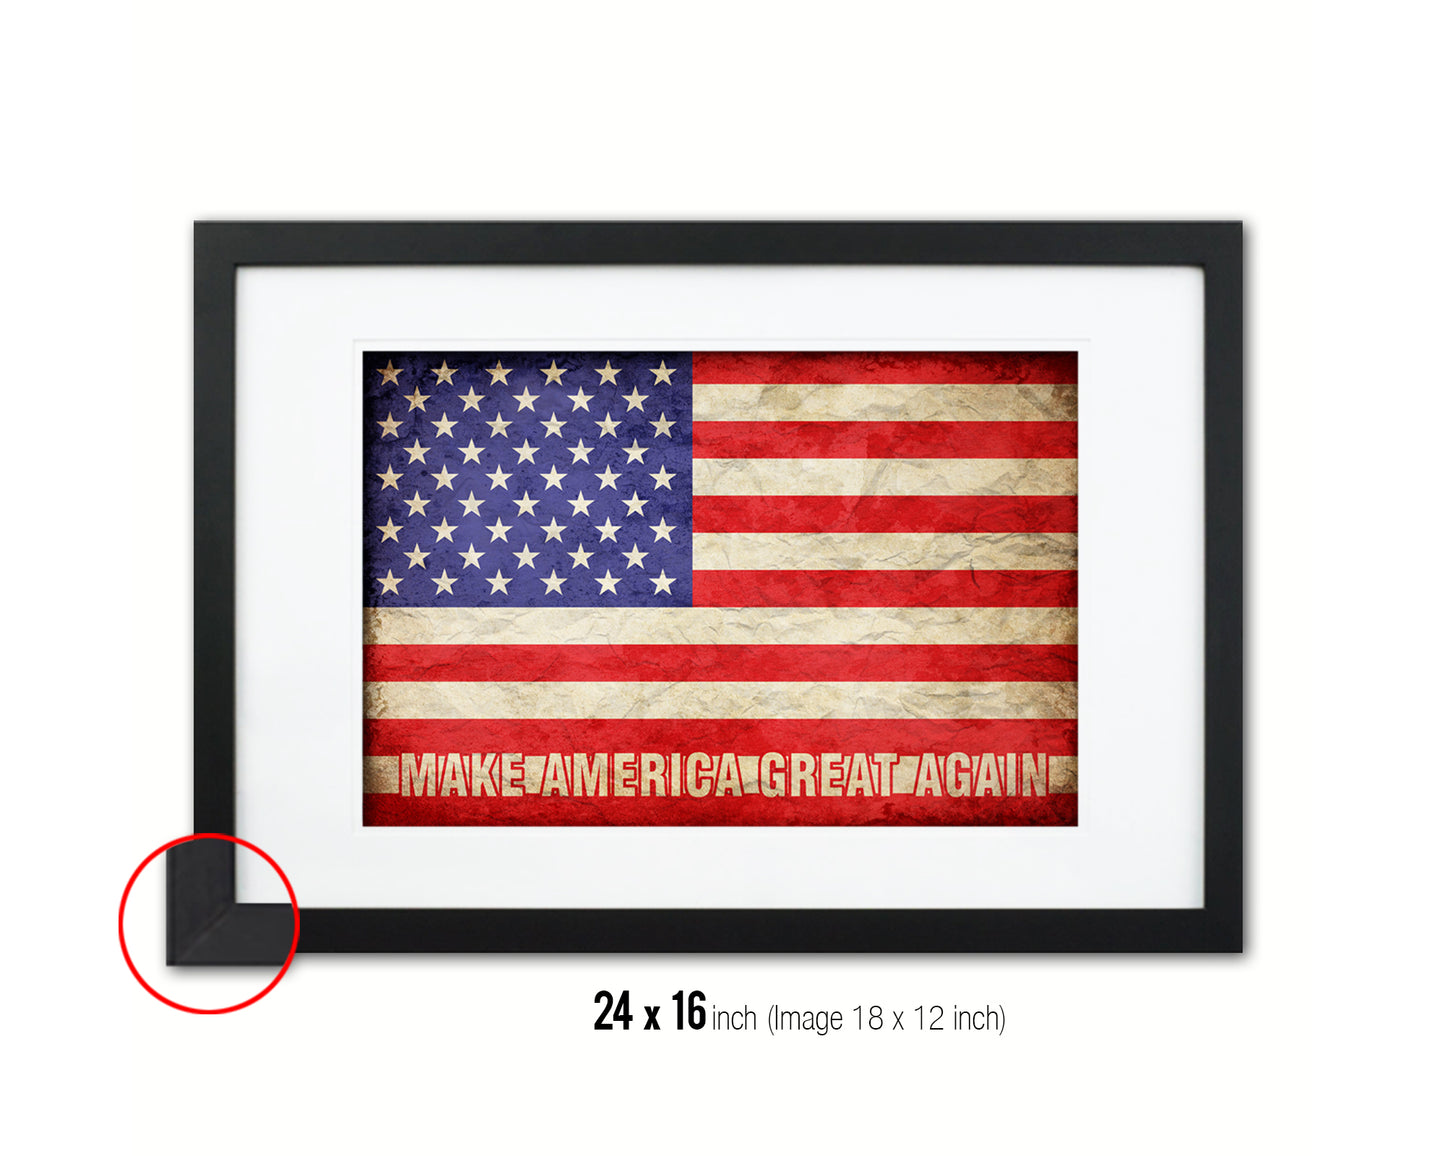 Make America Great Again, Donald Trump Campaign Vintage Military Flag Framed Print Art